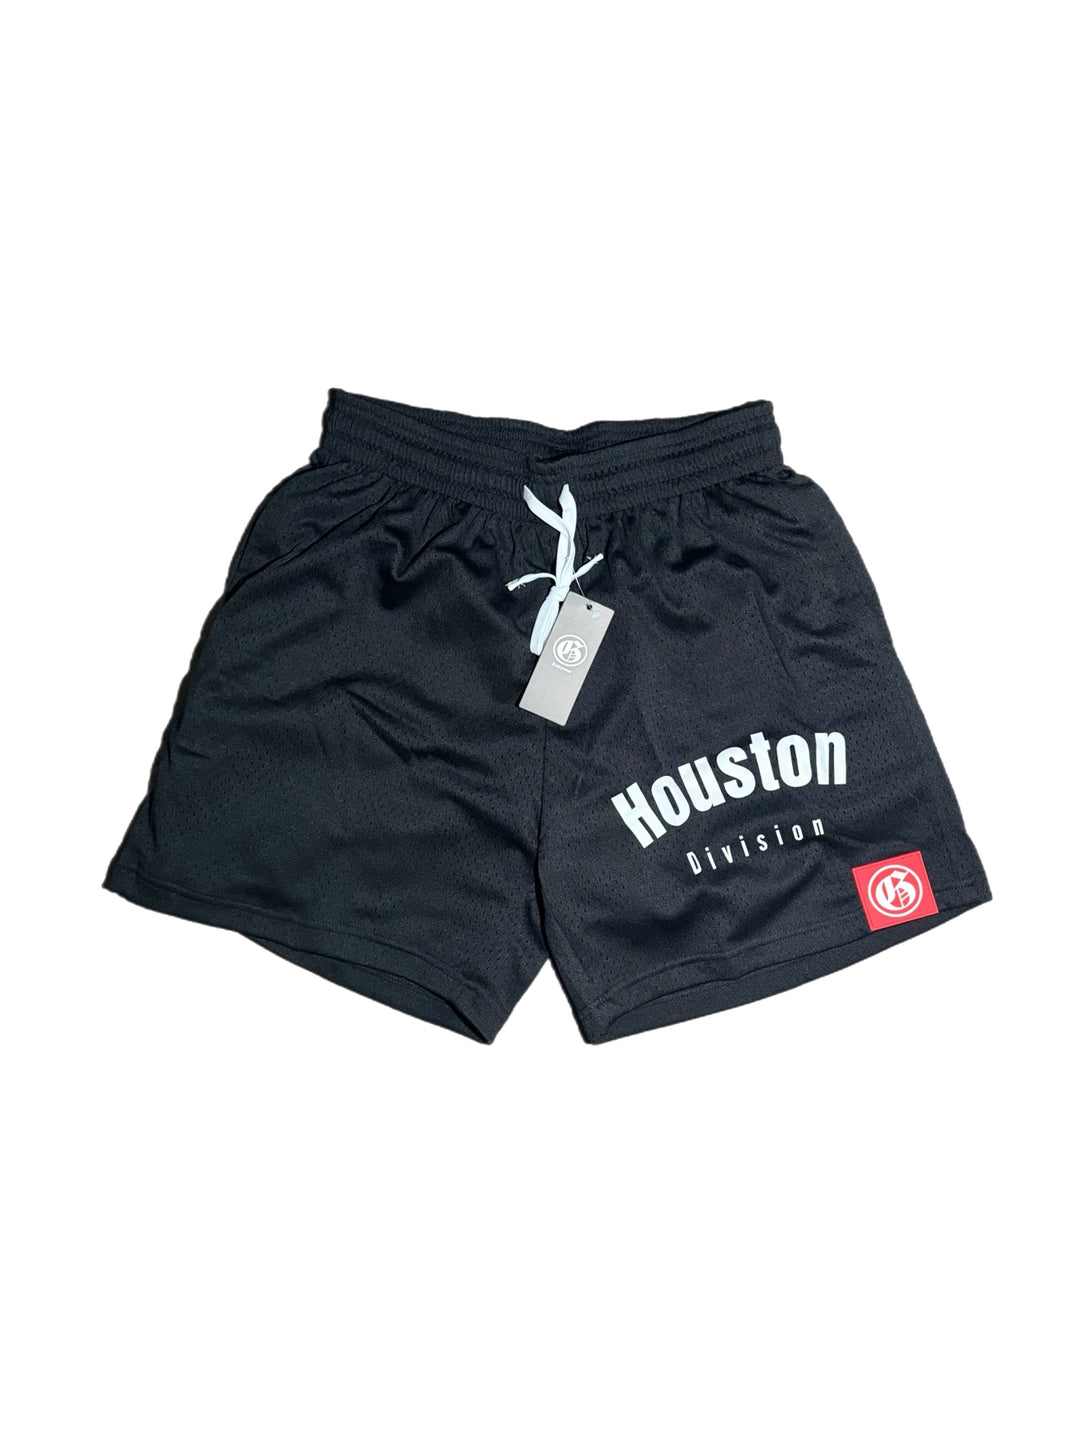 “Houston” Mesh Shorts